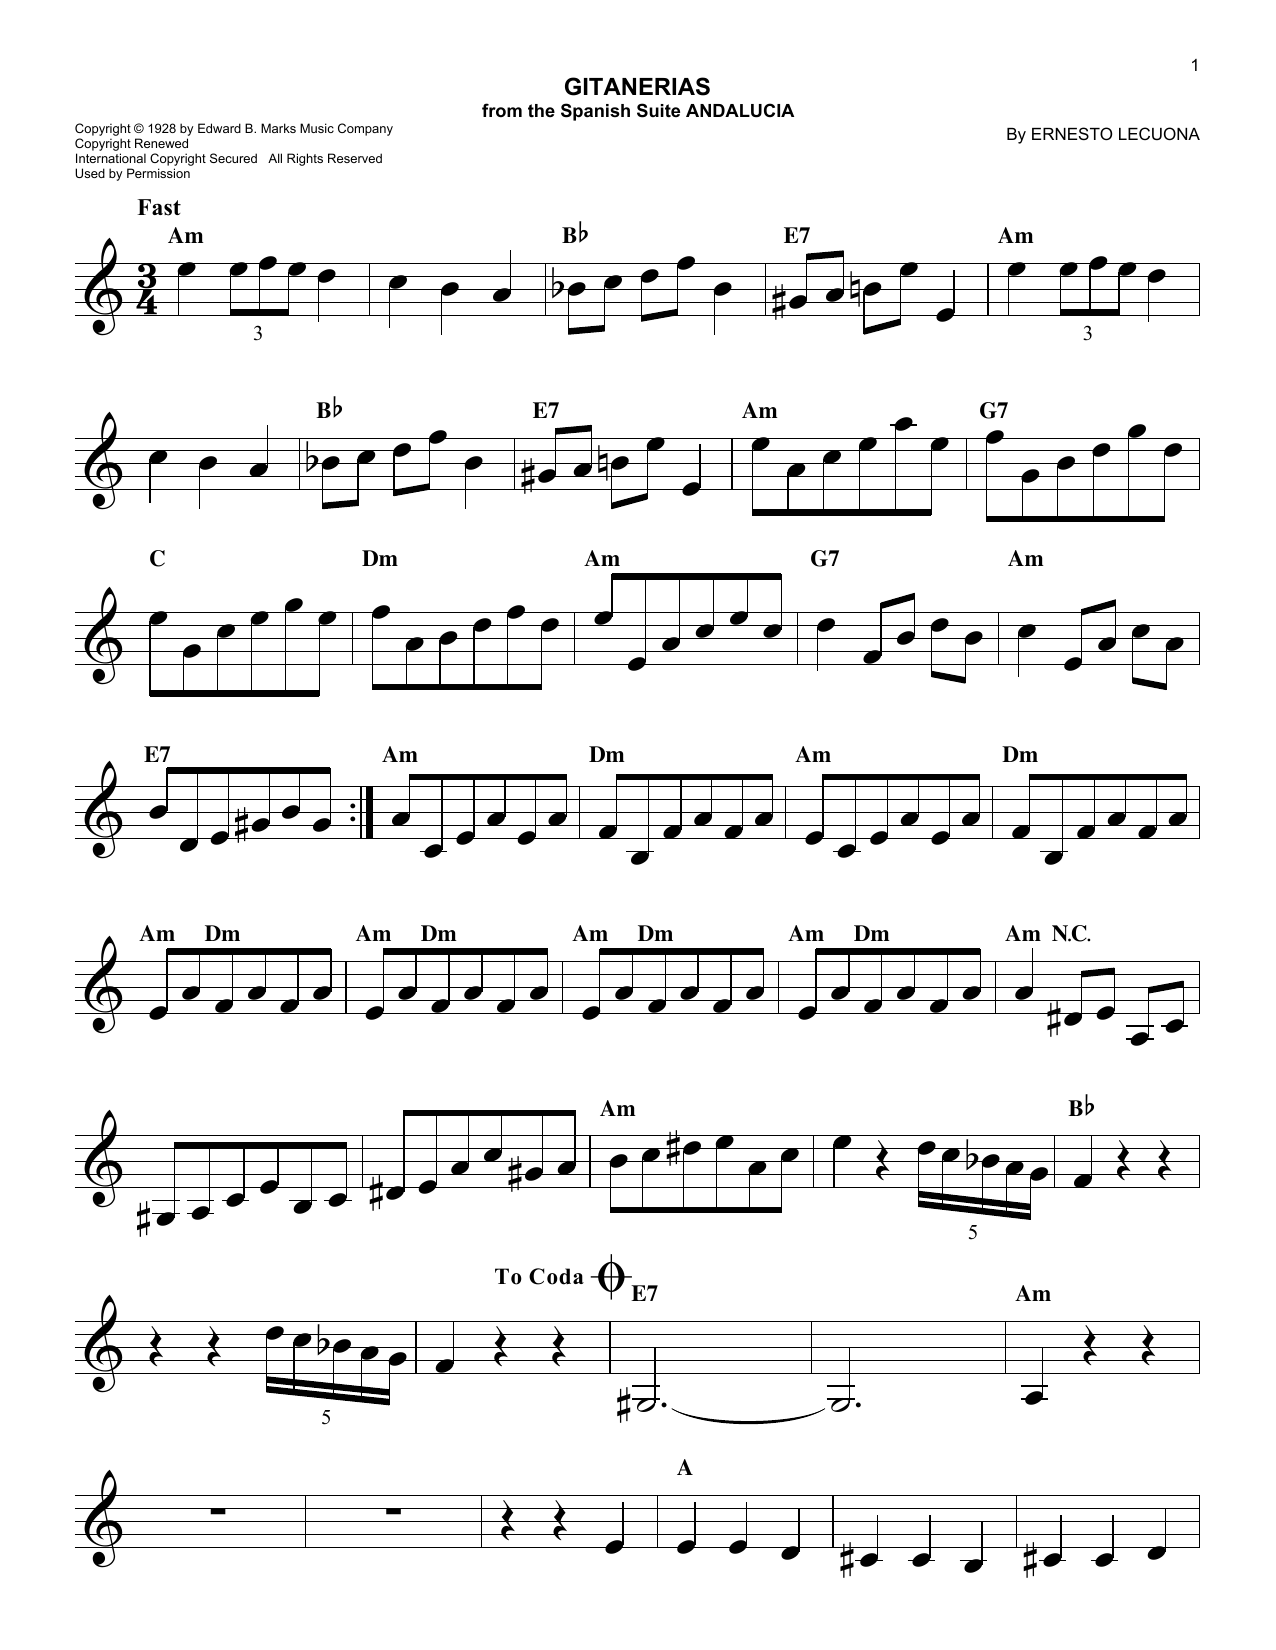 Ernesto Lecuona Gitanerias Sheet Music Notes & Chords for Melody Line, Lyrics & Chords - Download or Print PDF